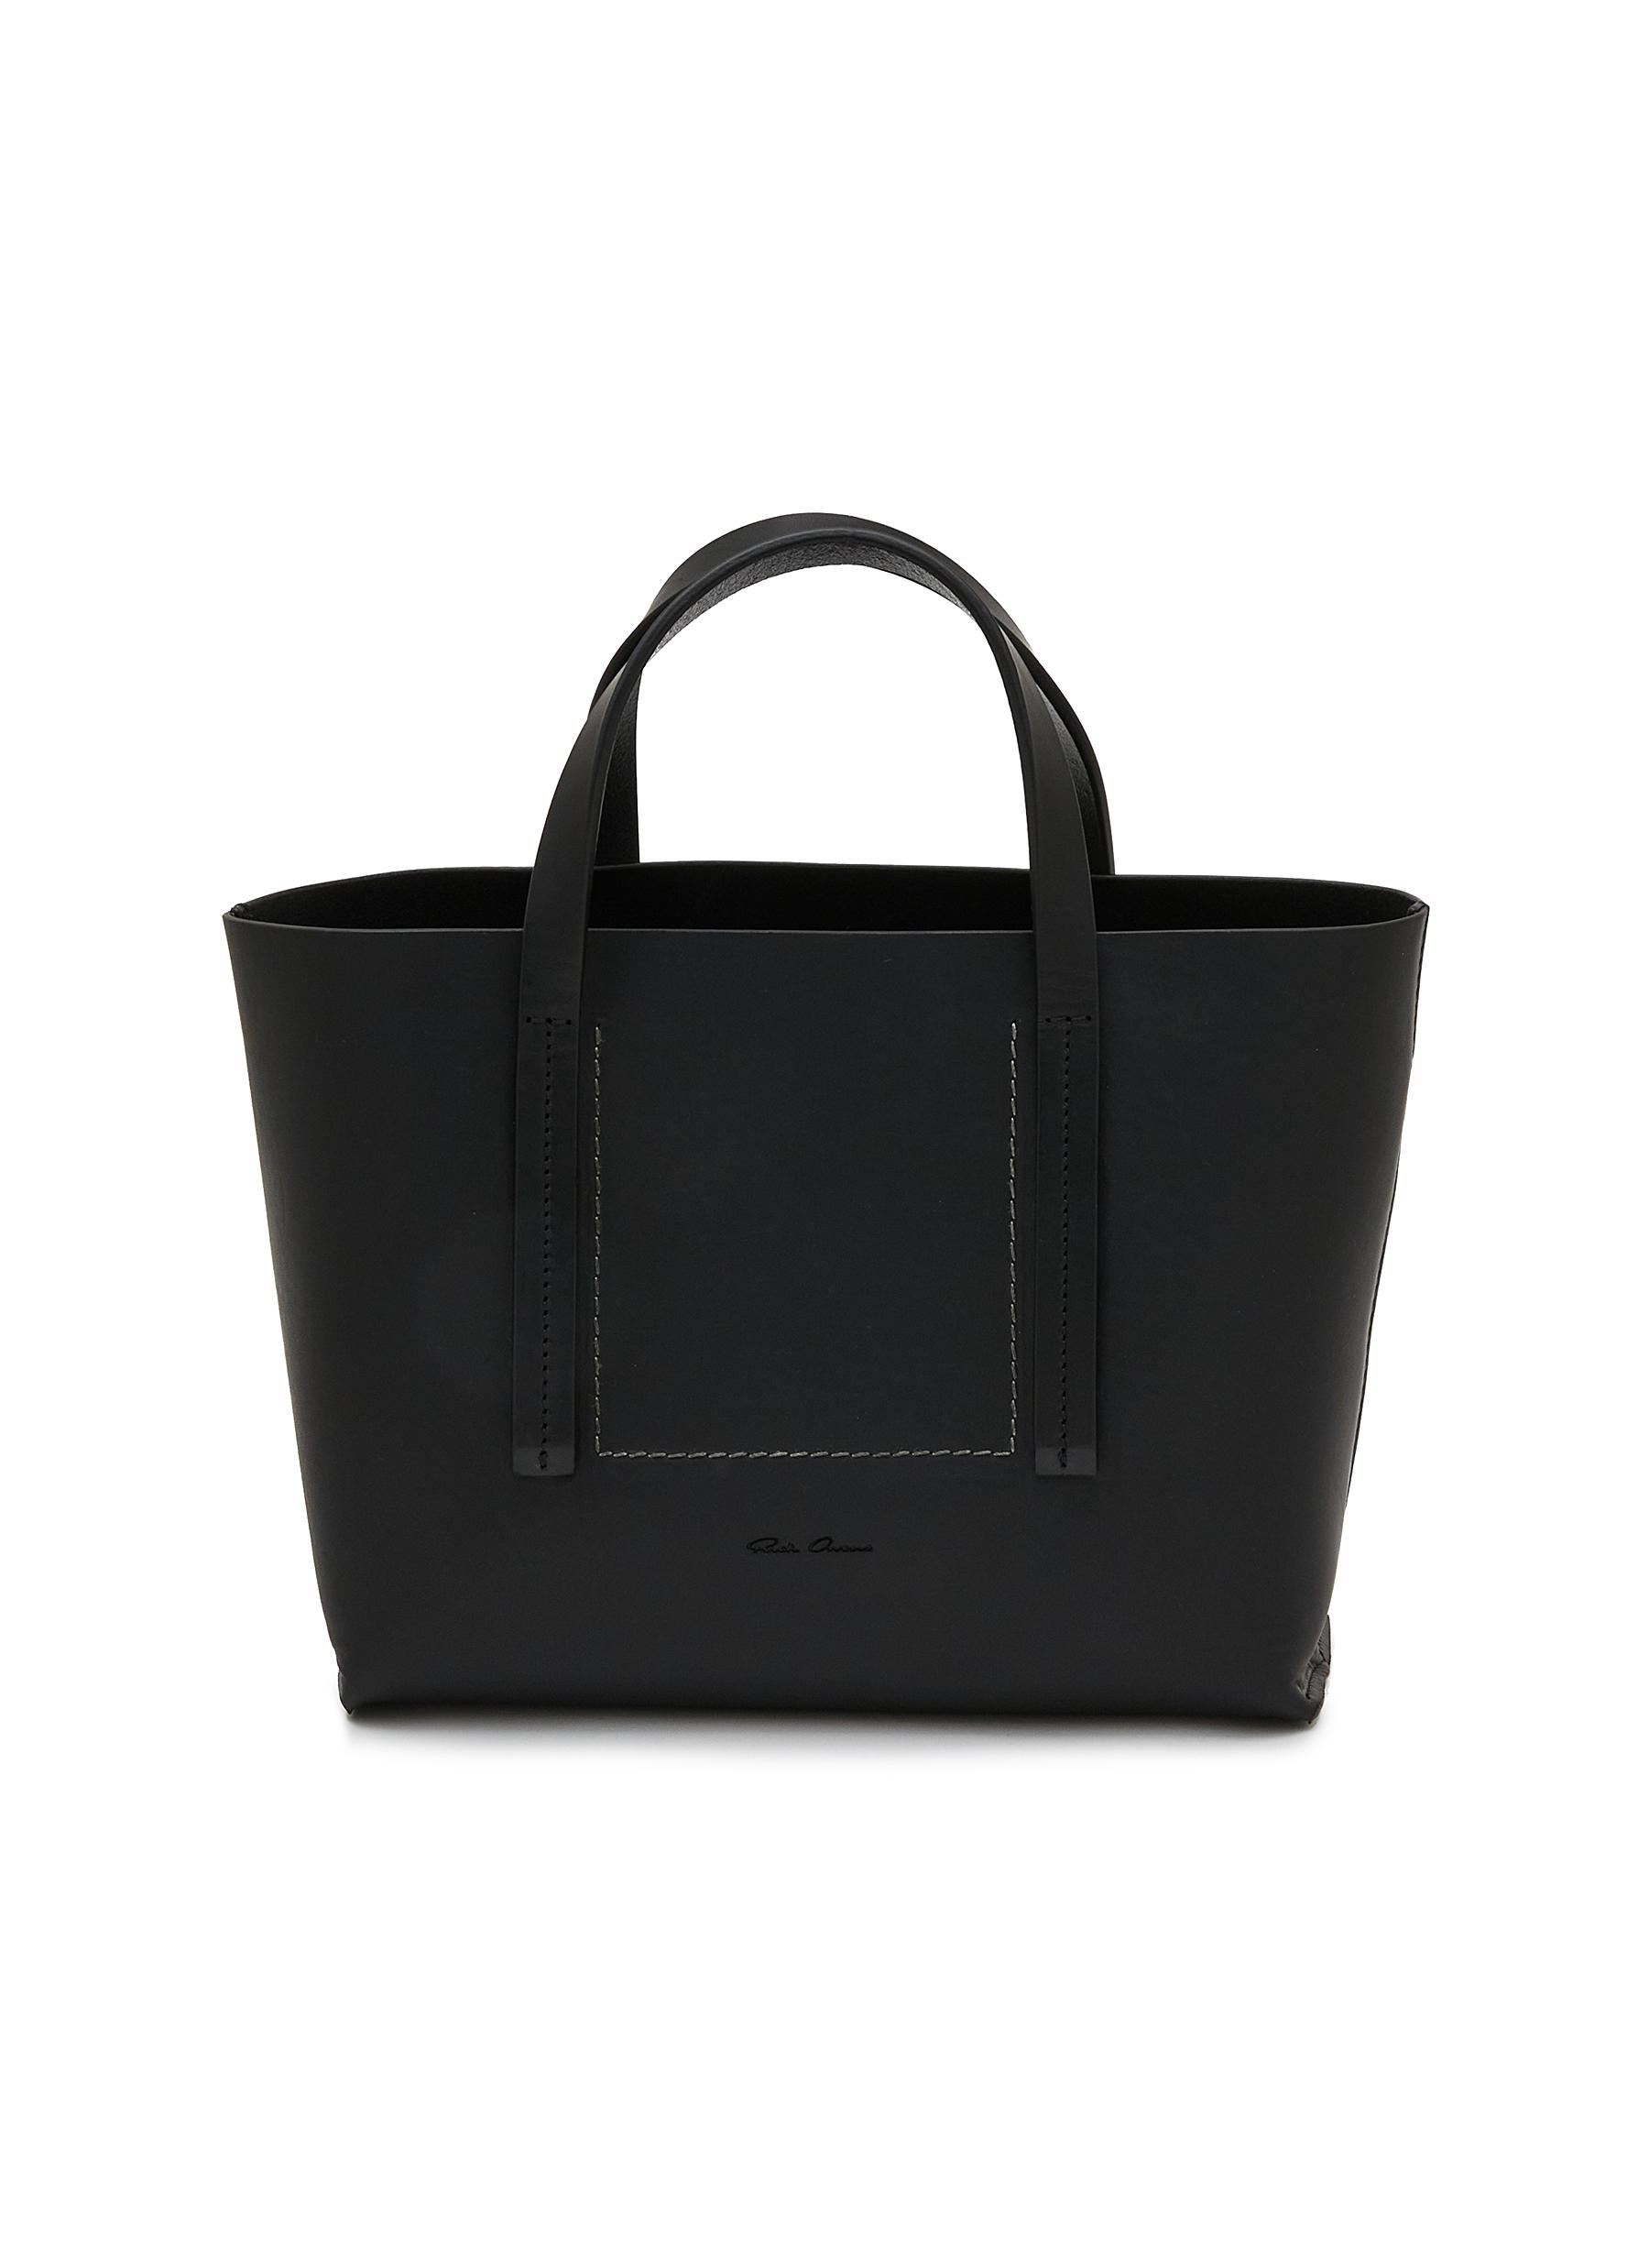 RICK OWENS | Mini Shopper Leather Tote Bag | Women | Lane Crawford